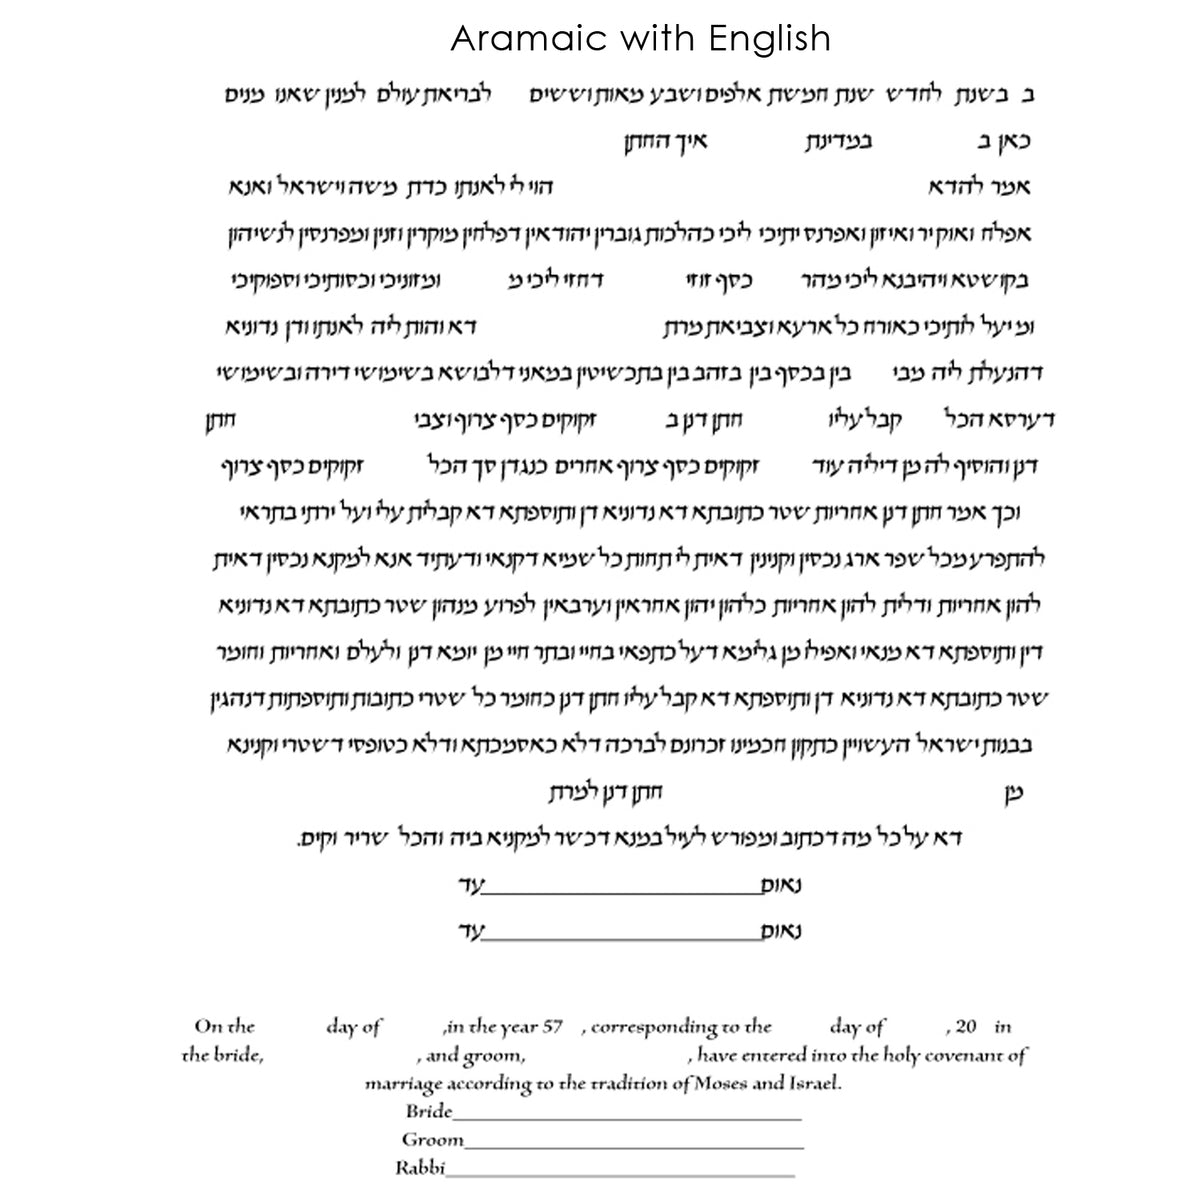 Chris Cozen - Aramaic with English Text